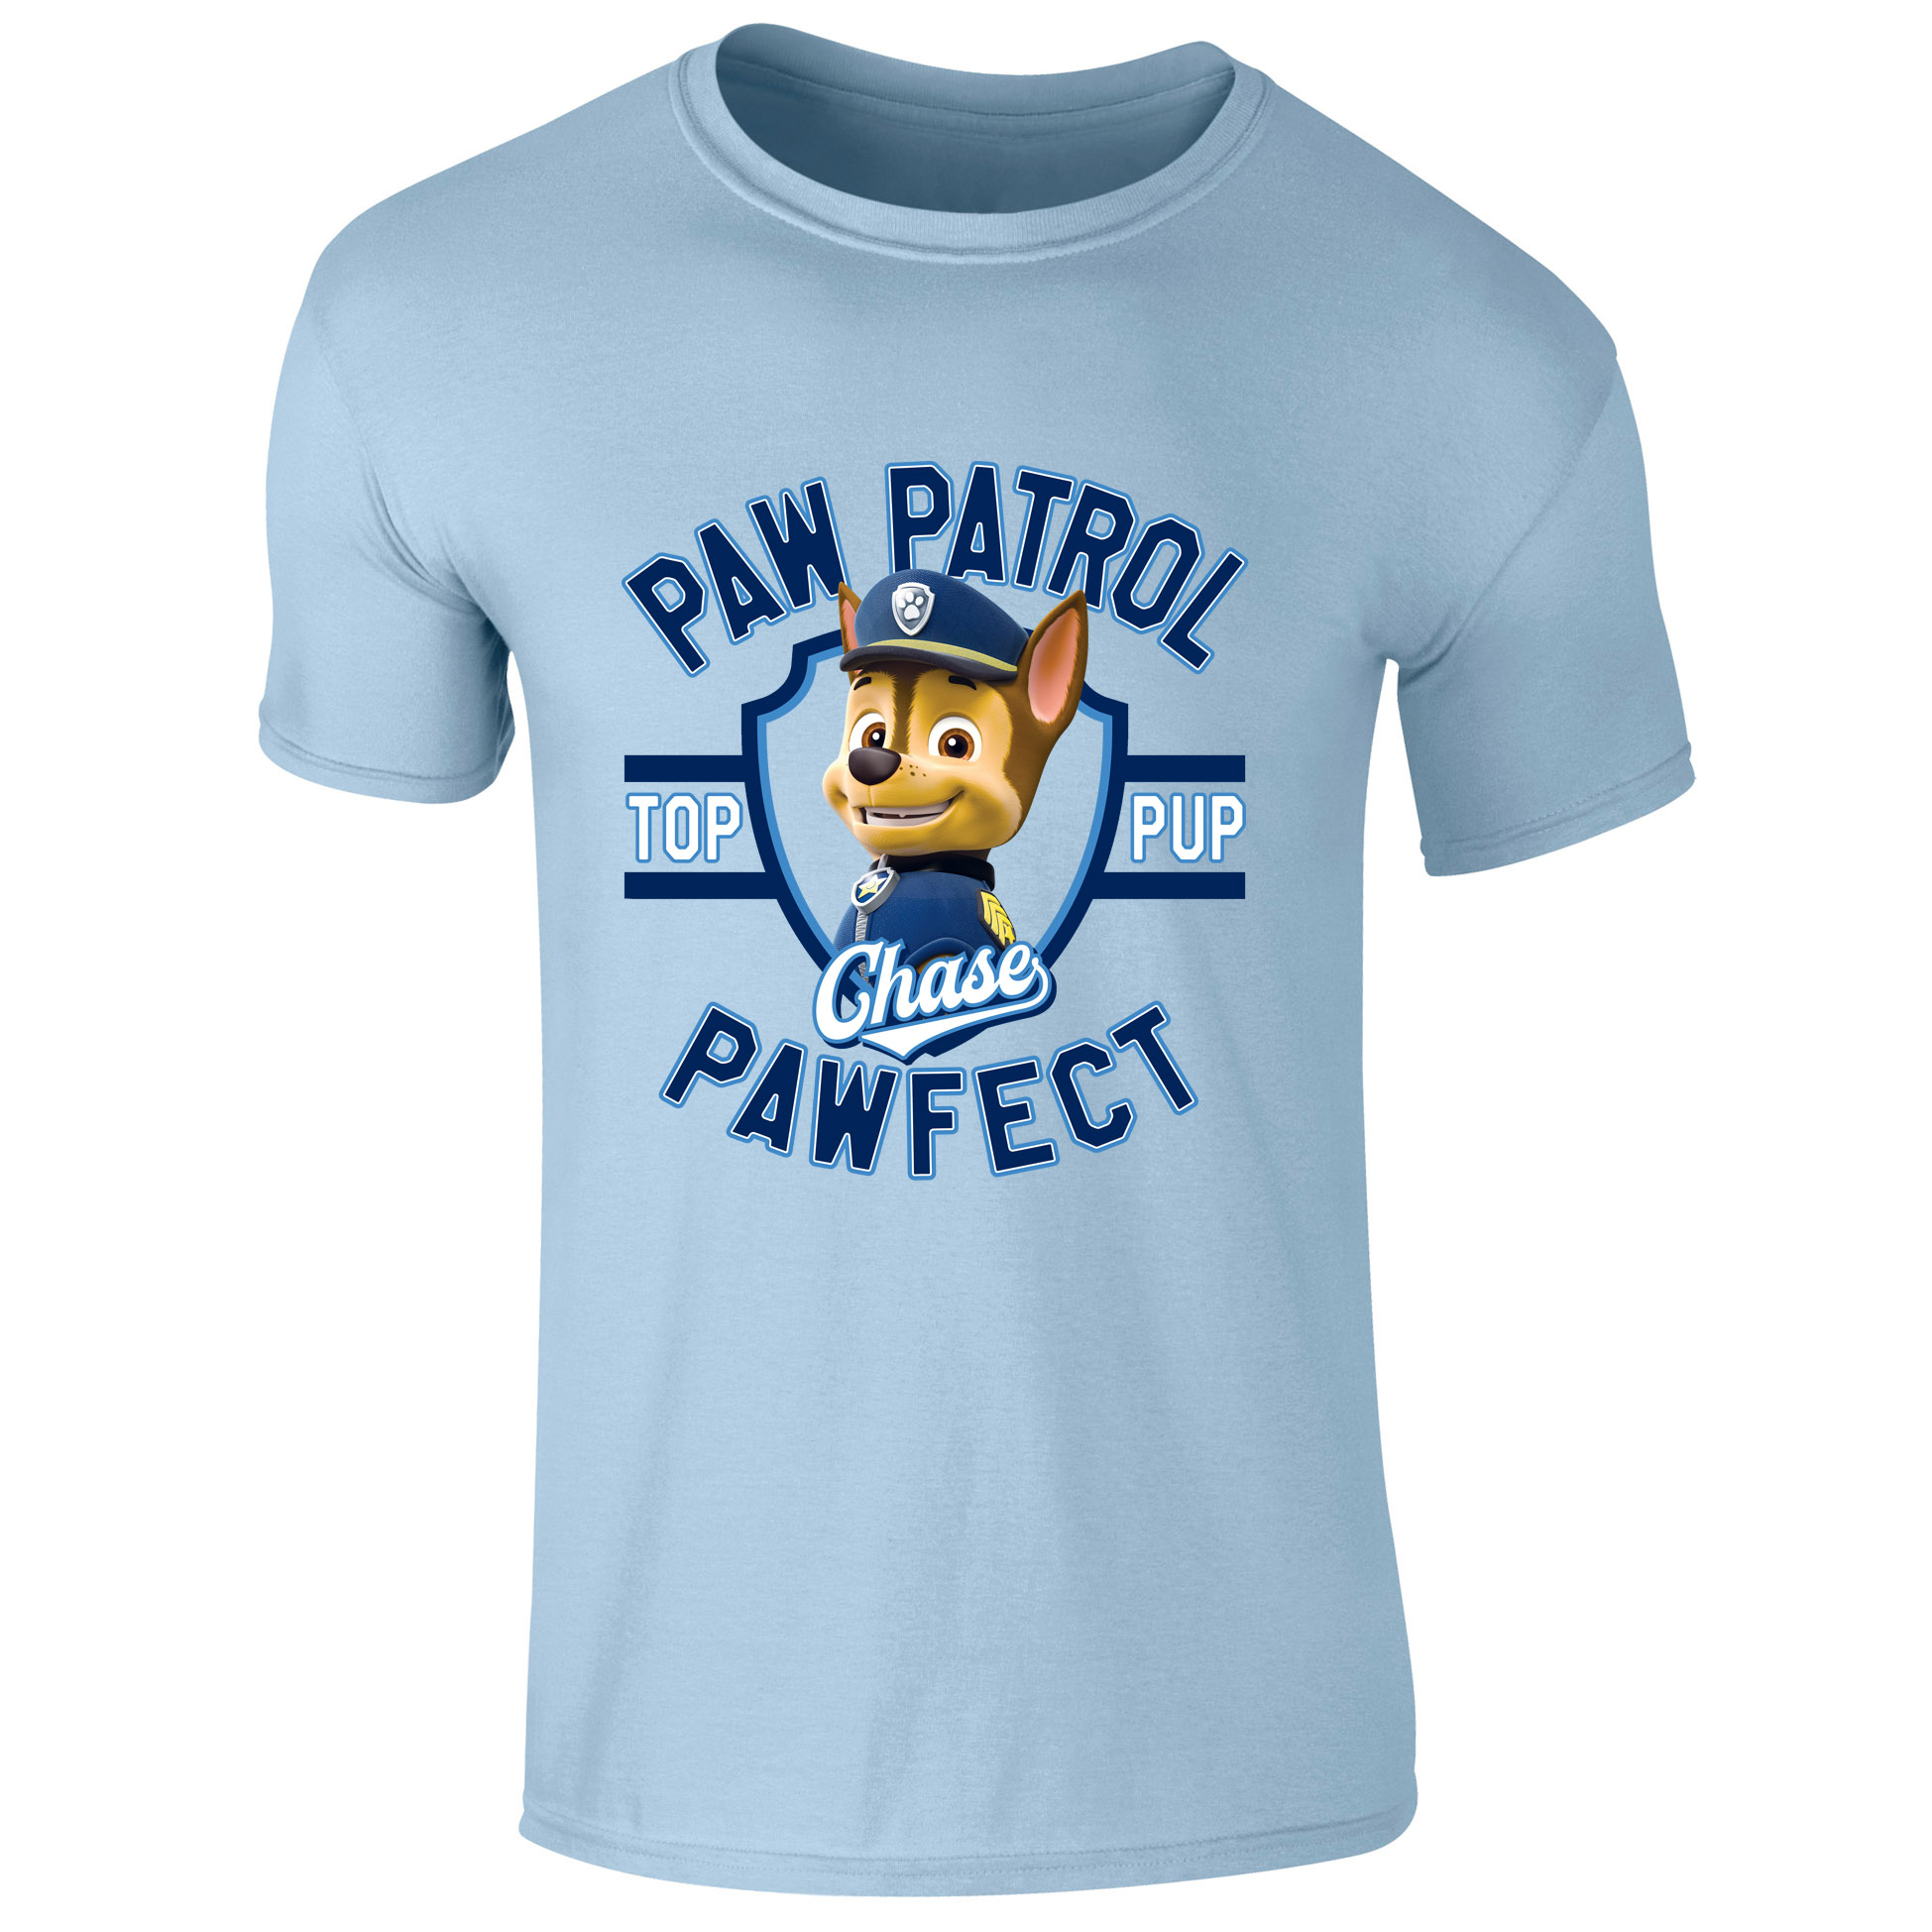 Nickelodeon Paw Patrol 'Chase' Top Pup Pawfect Kids Short Sleeve Printed T Shirt Workwear World